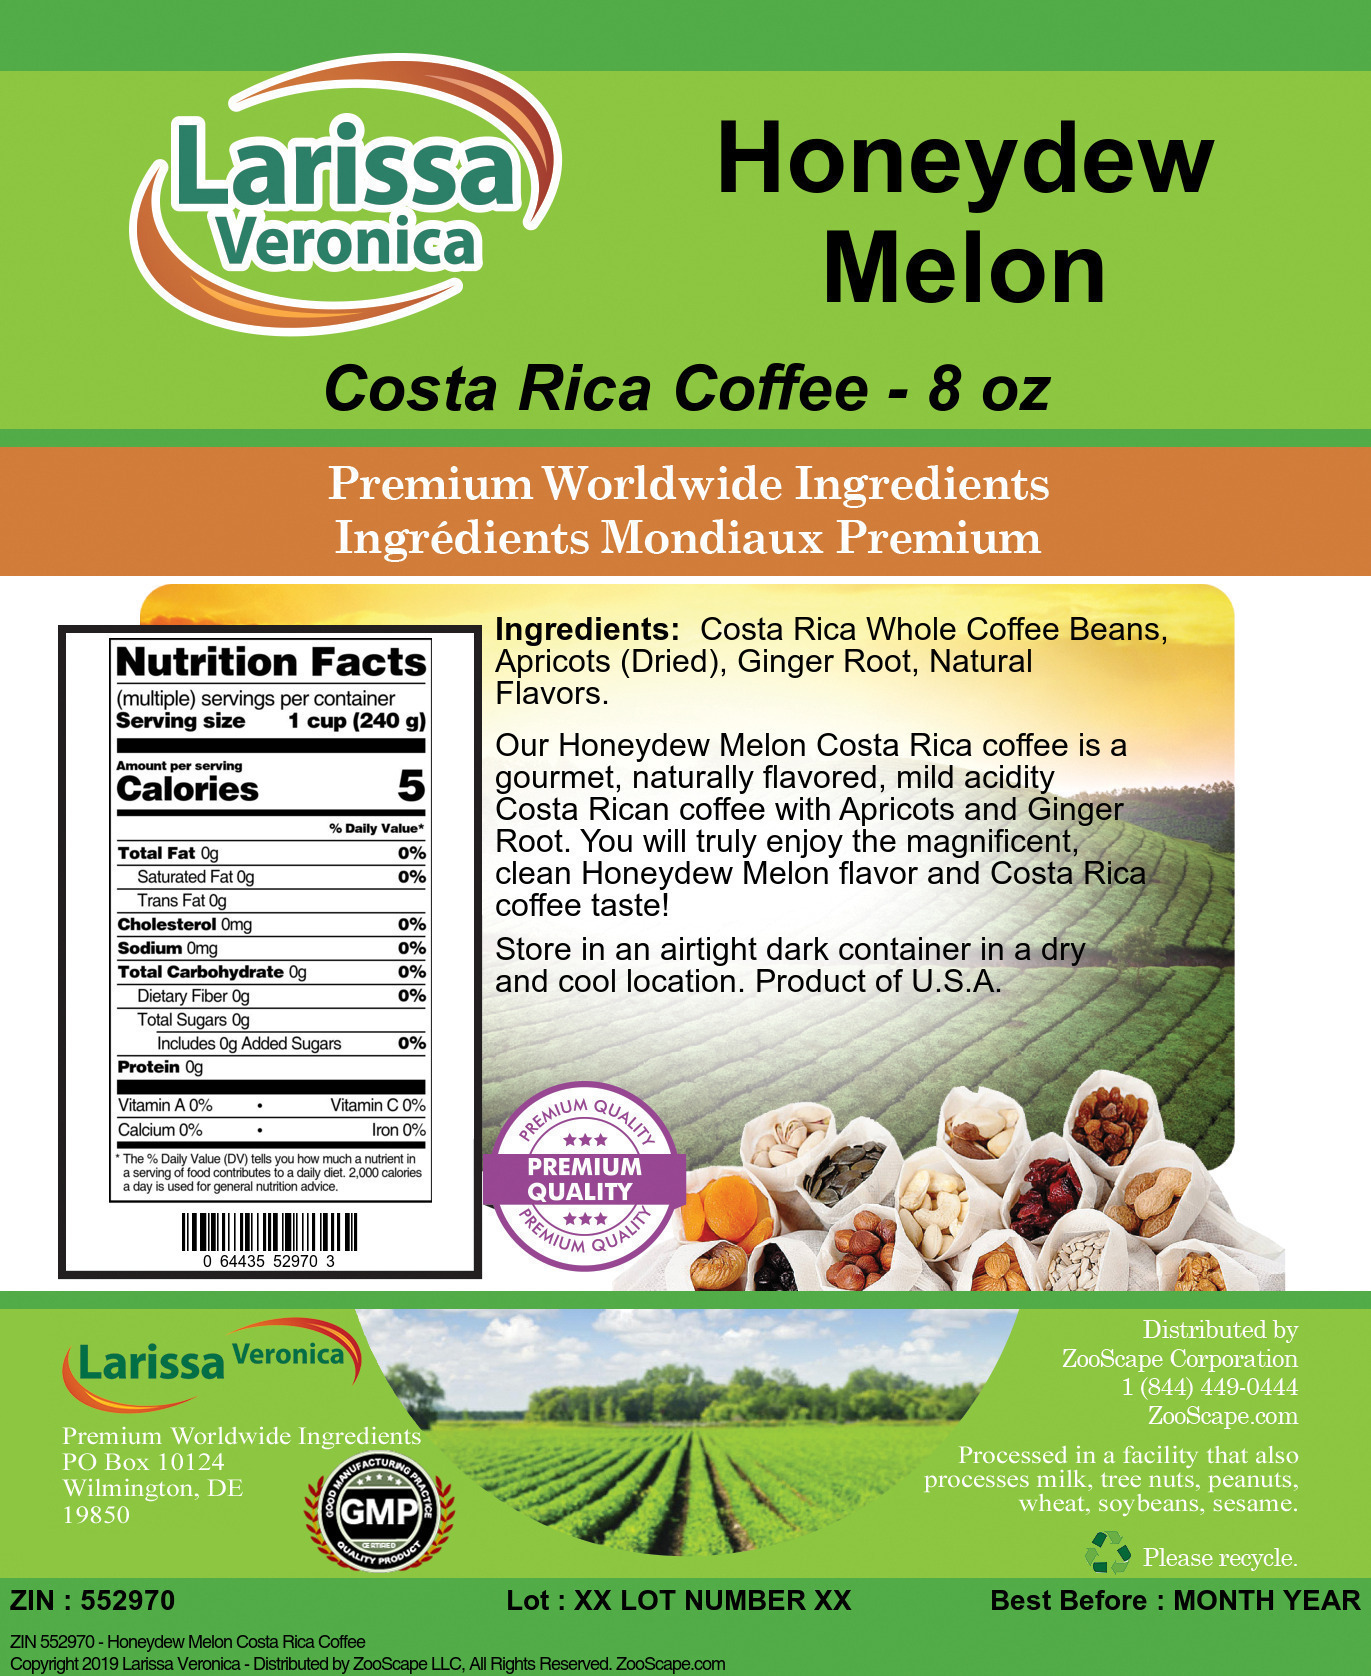 Honeydew Melon Costa Rica Coffee - Label